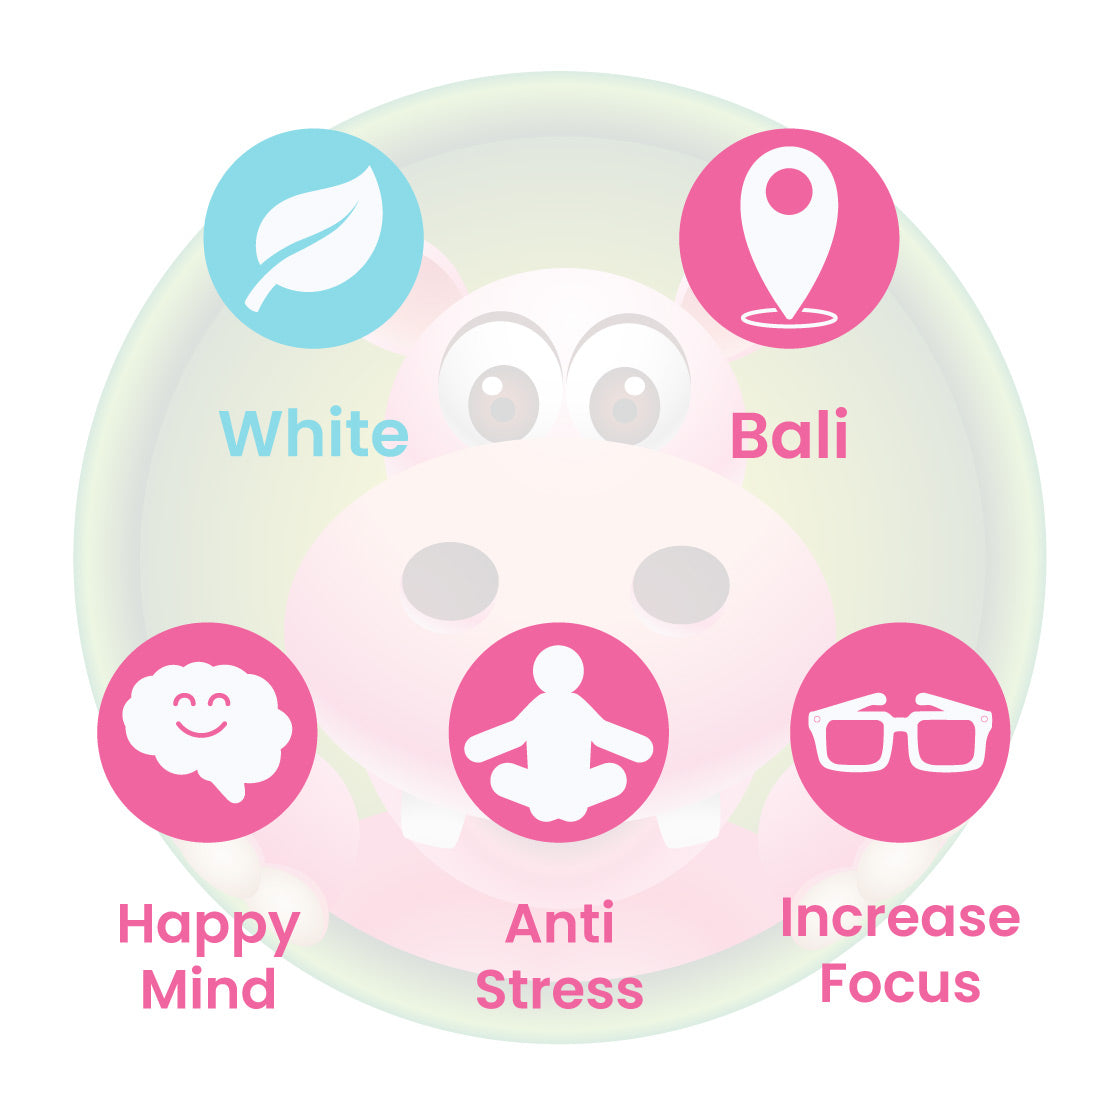 Infographic Details for Happy Hippo White Vein Bali Kratom Powder. Leaf color: White Vein. Kratom Strain Origin: Bali. Kratom Effects resonate with Happy Mind, Calm Mentality, and Focus.